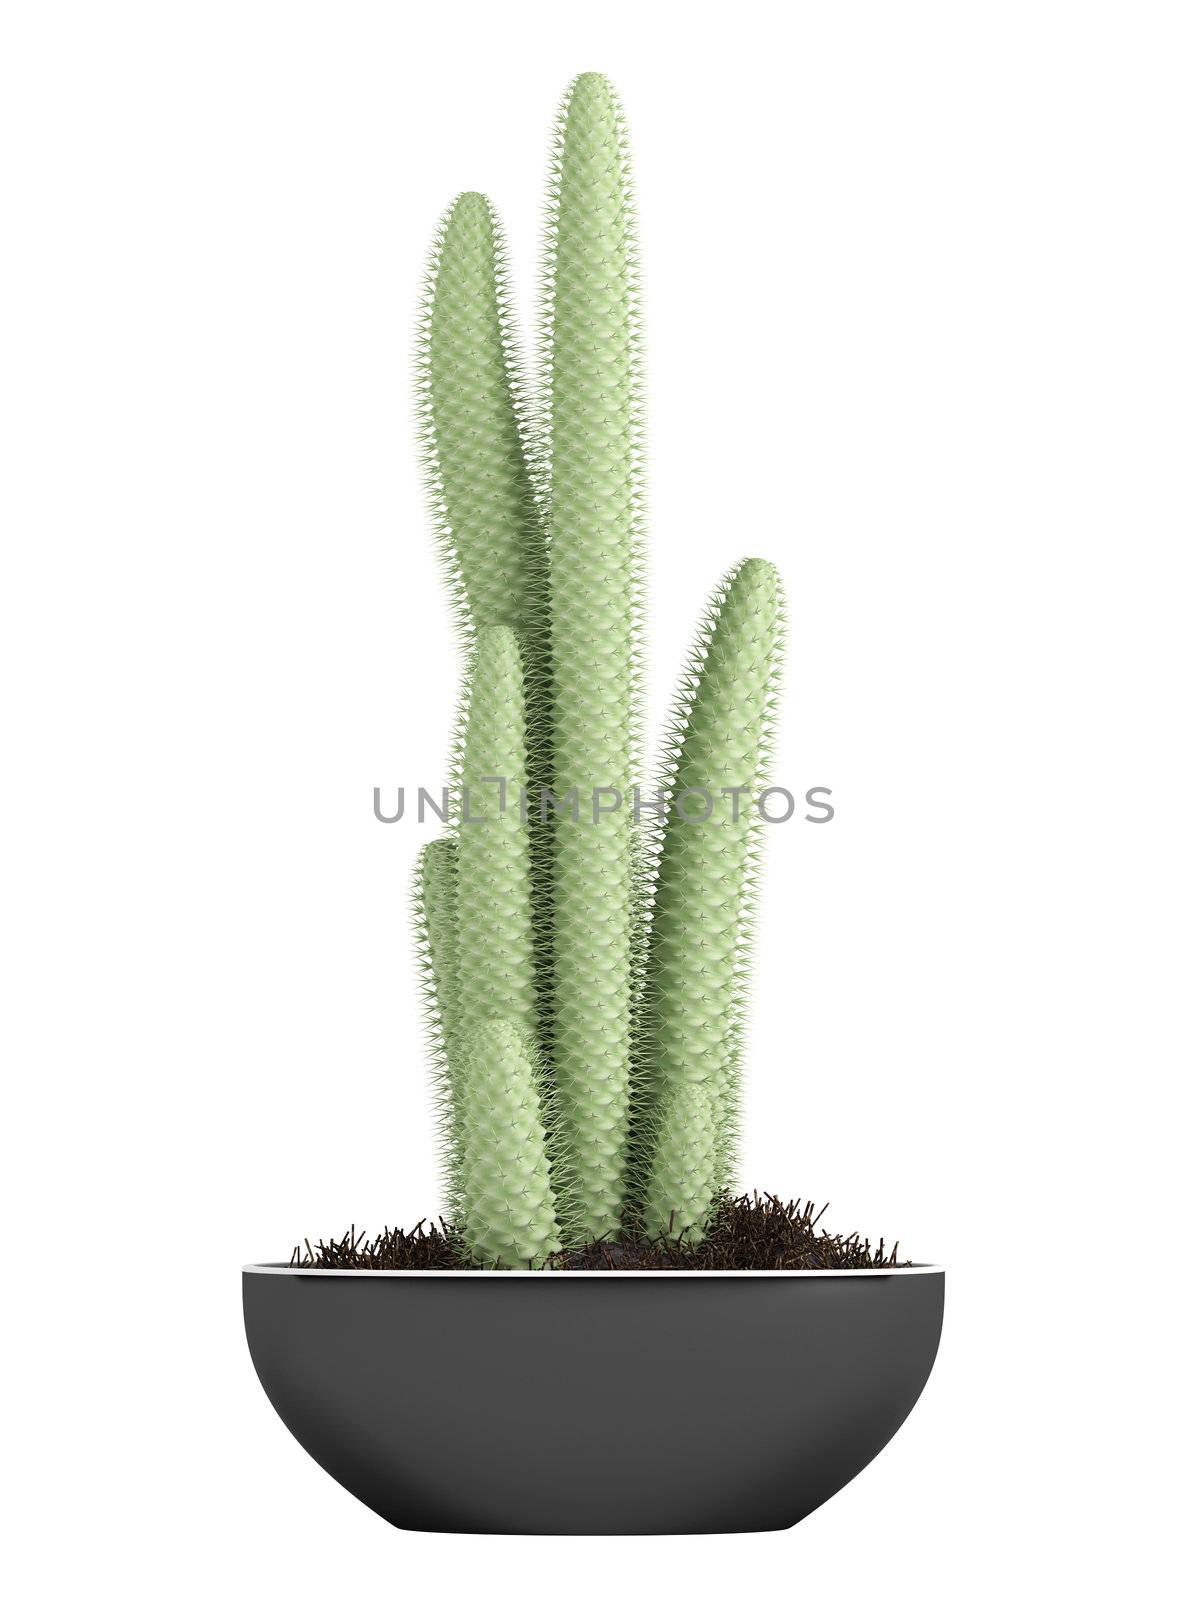 Cactus in a pot by AlexanderMorozov